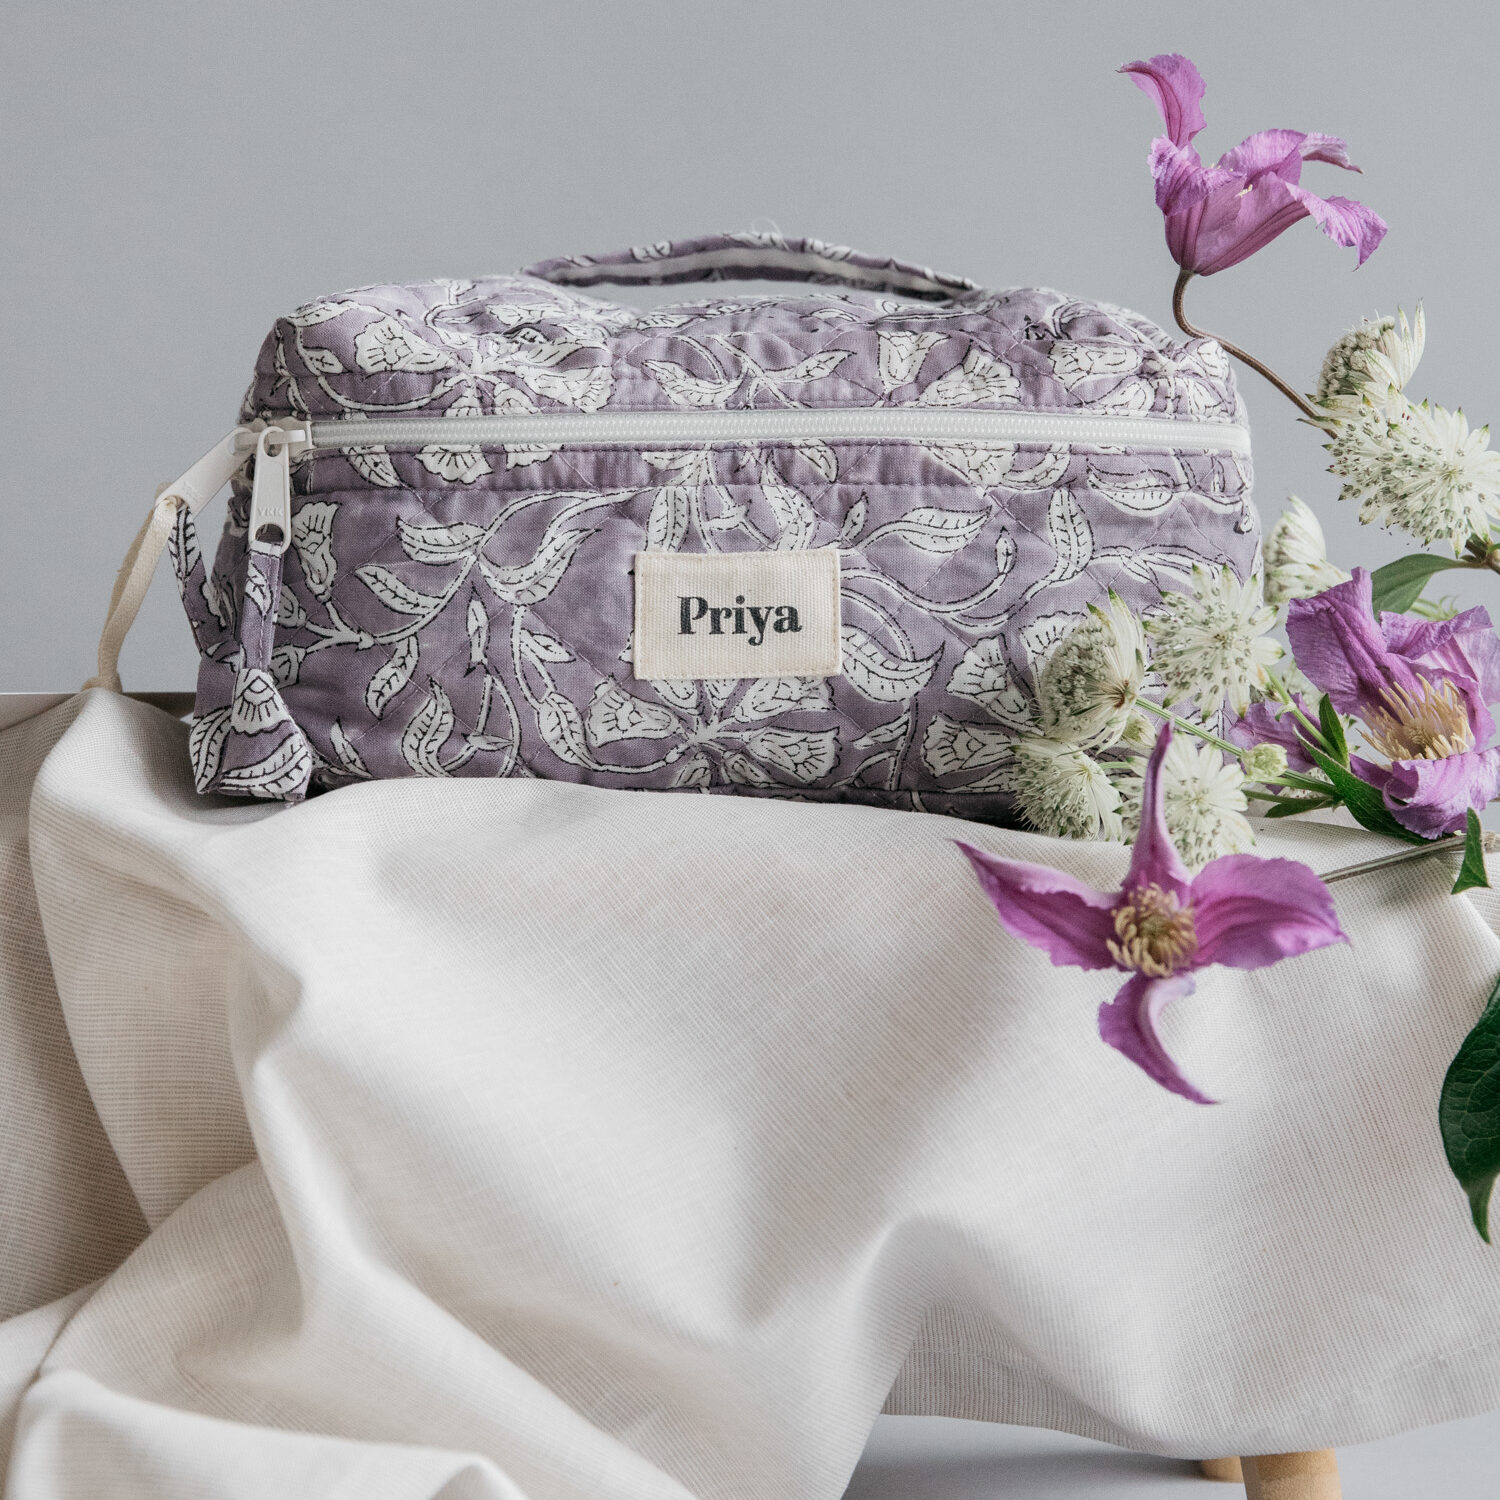 Priya Lavender Beauty Bag